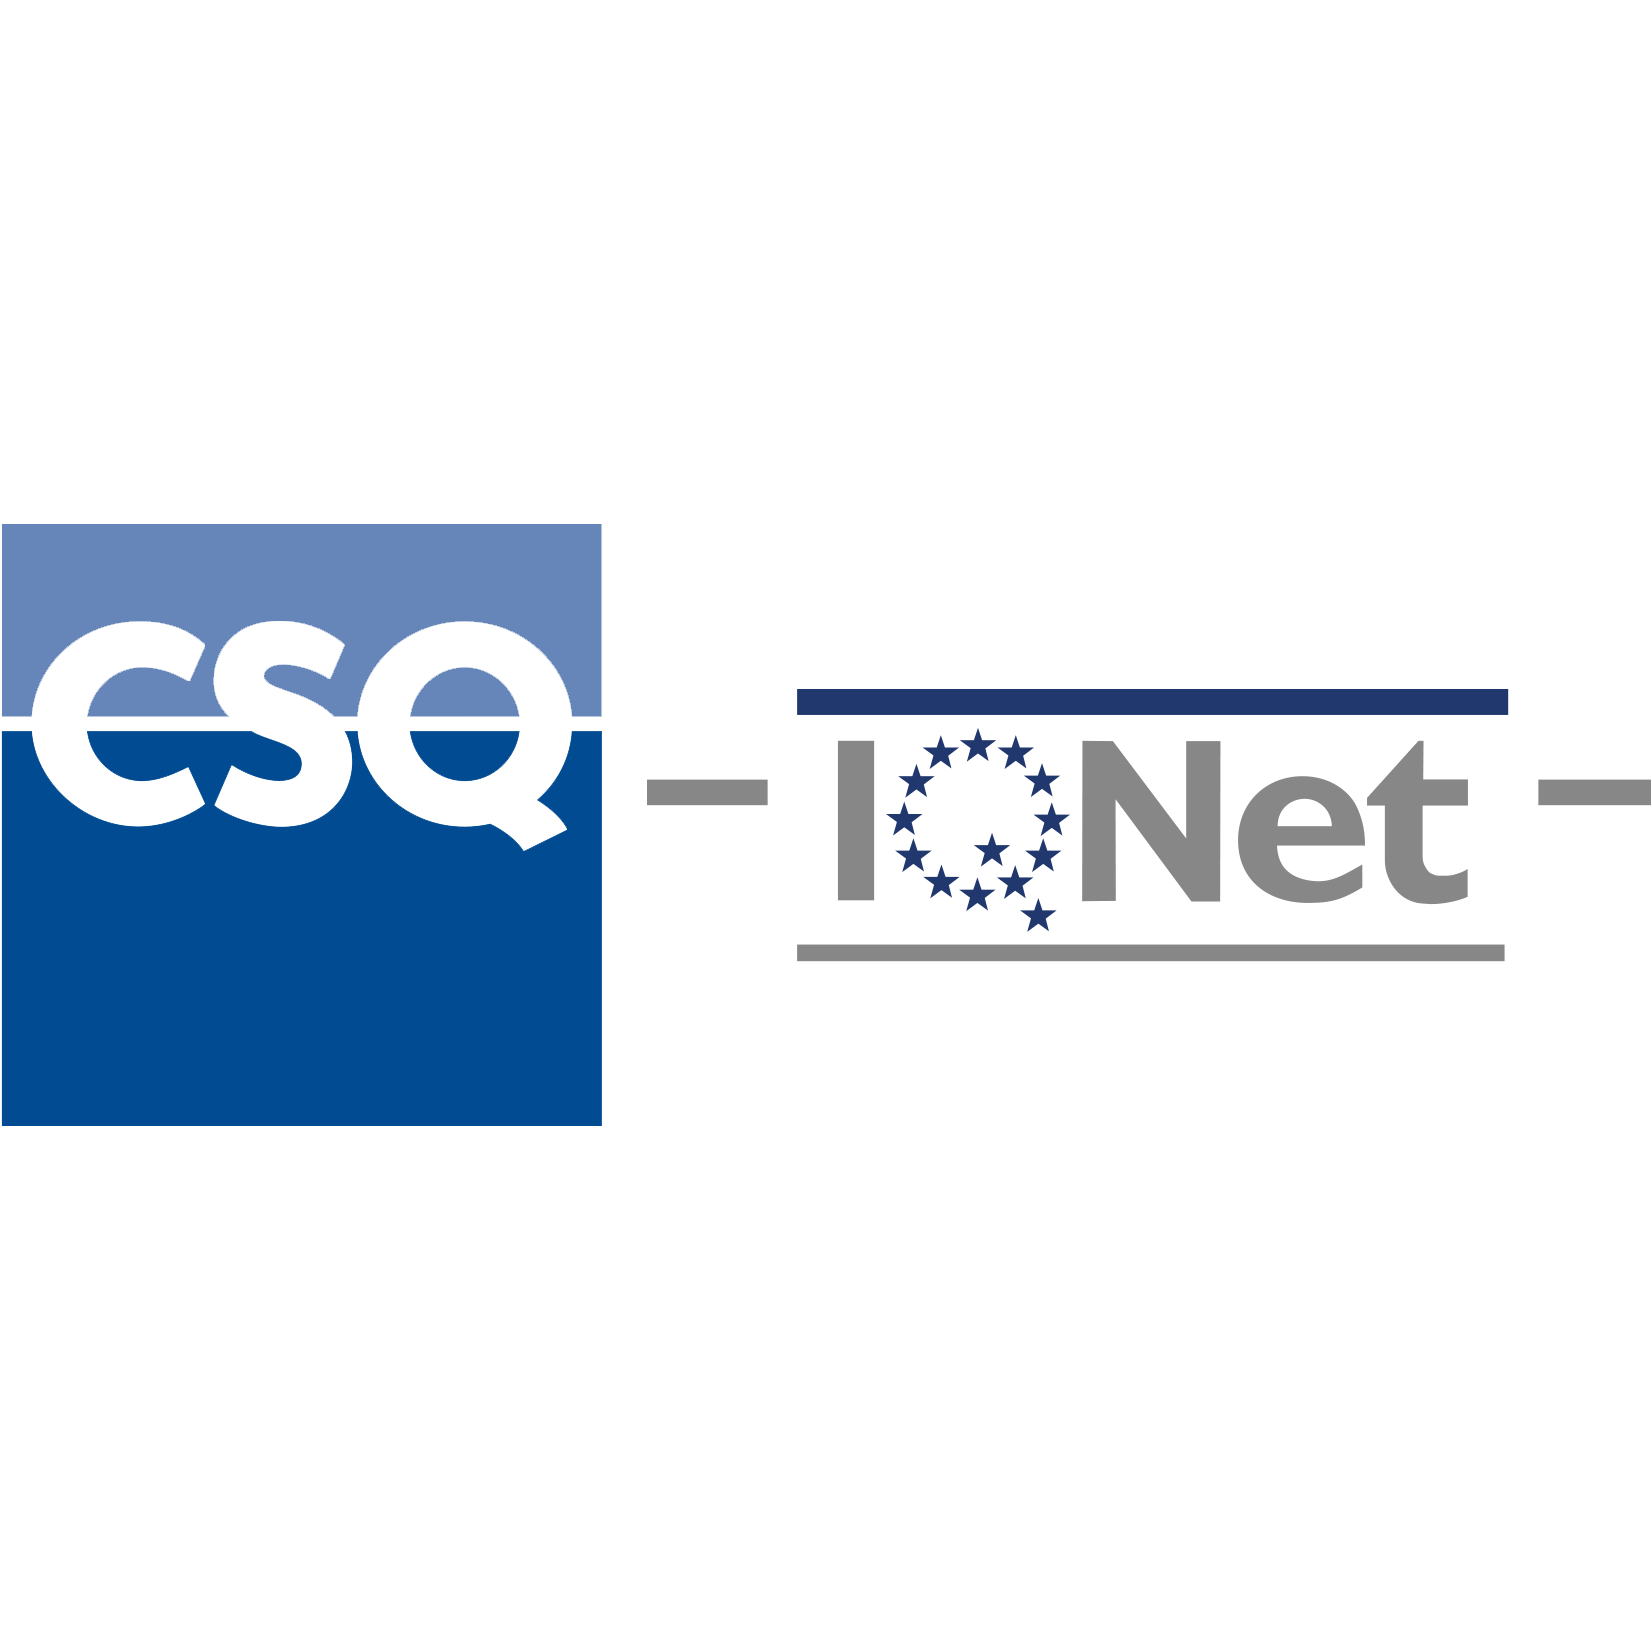 logo csq iqnet wegma 